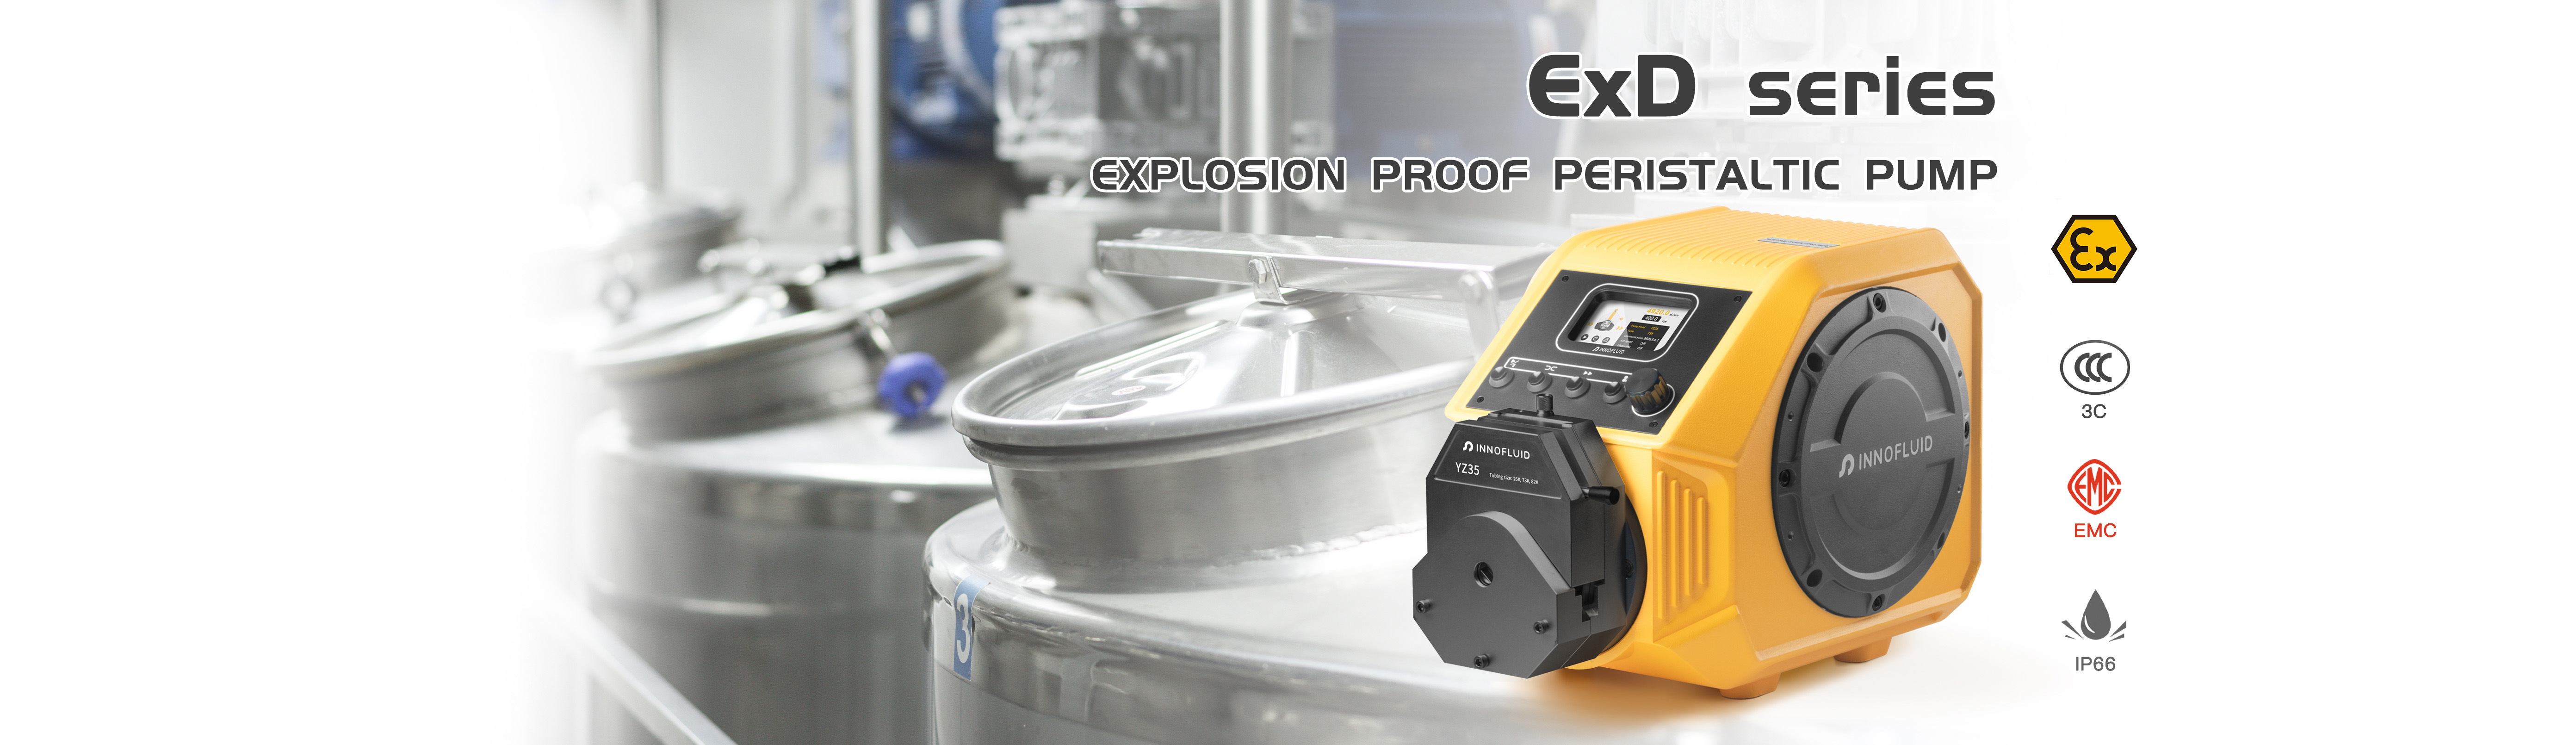 Explosion proof peristaltic pump